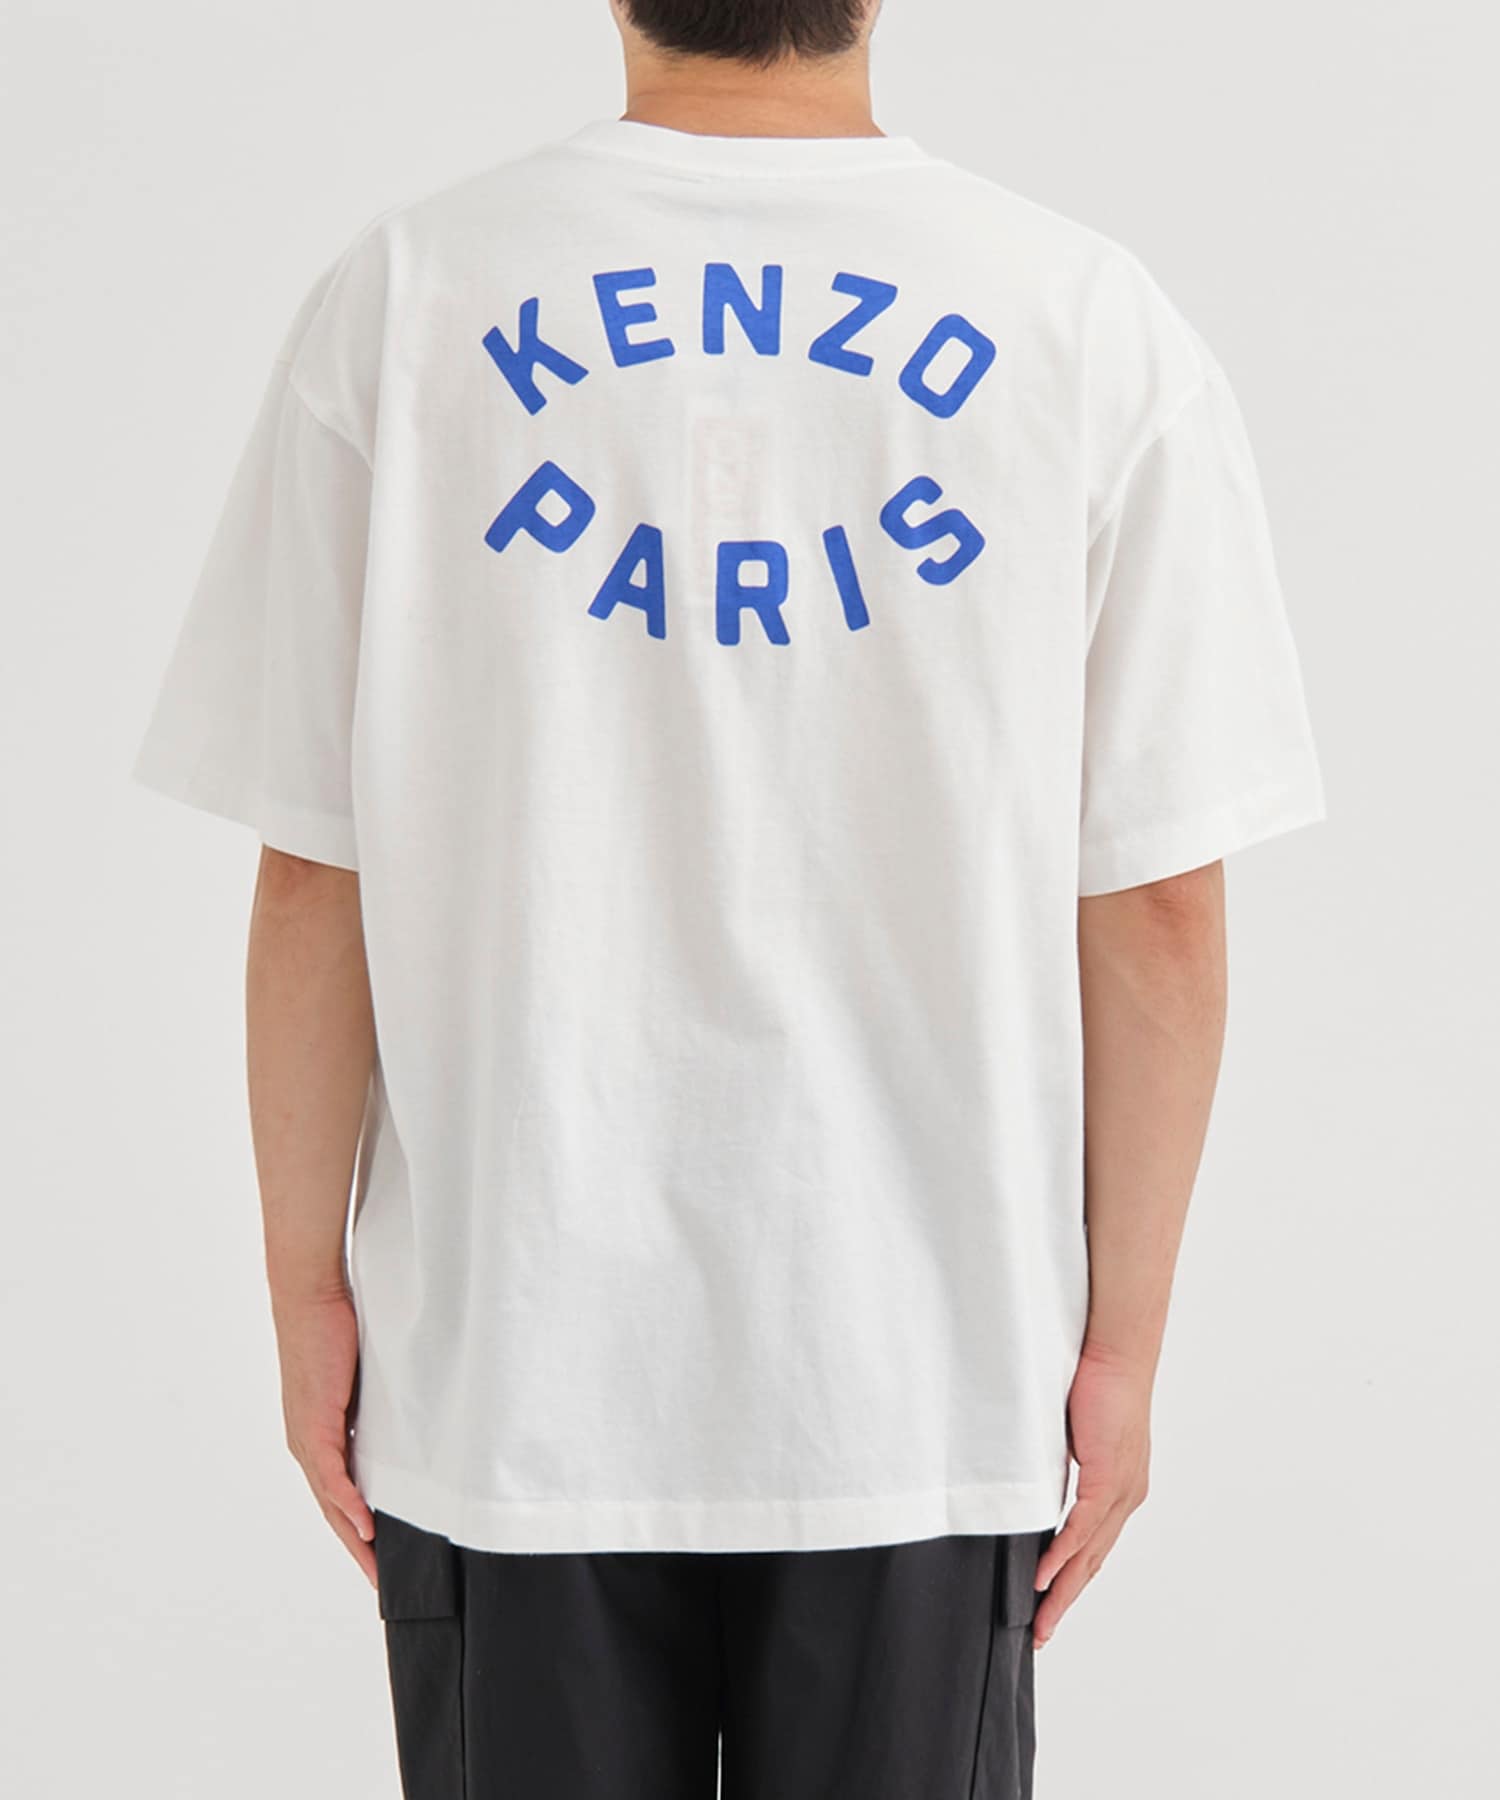 CLASSIC KENZO TARGET T-SHIRT | KENZO